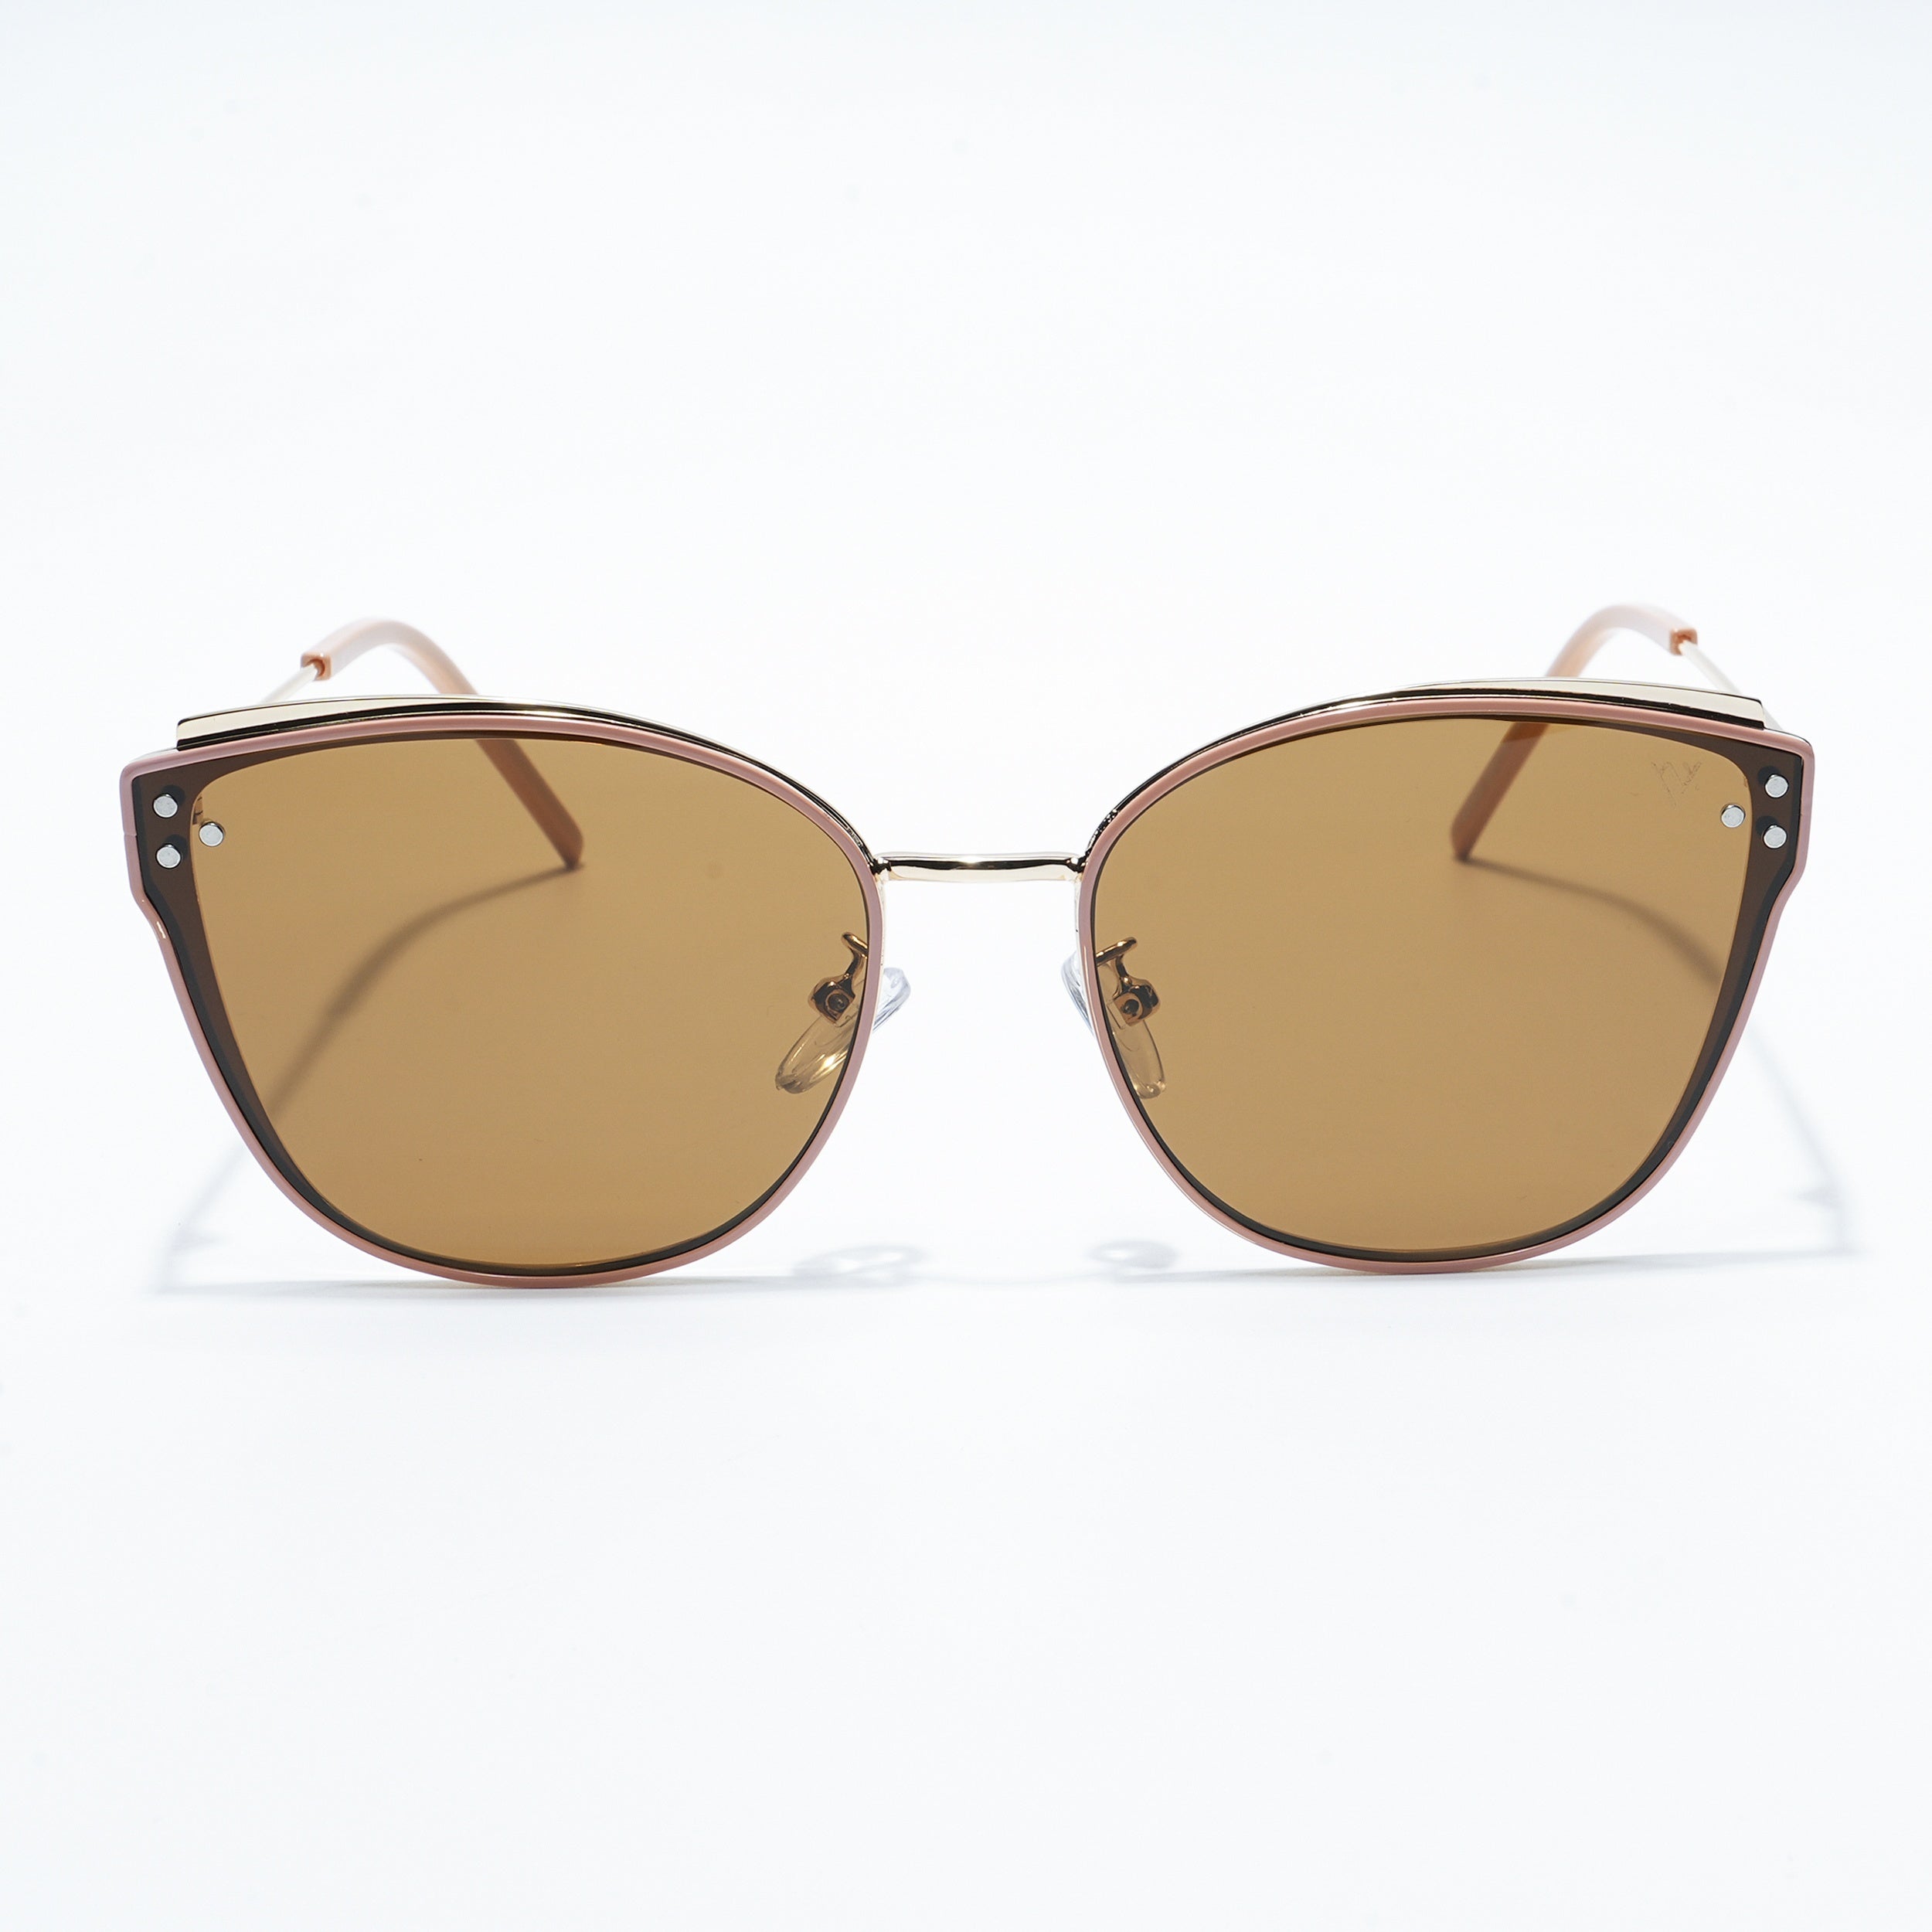 Voyage Cateye Brown Sunglasses MG2858